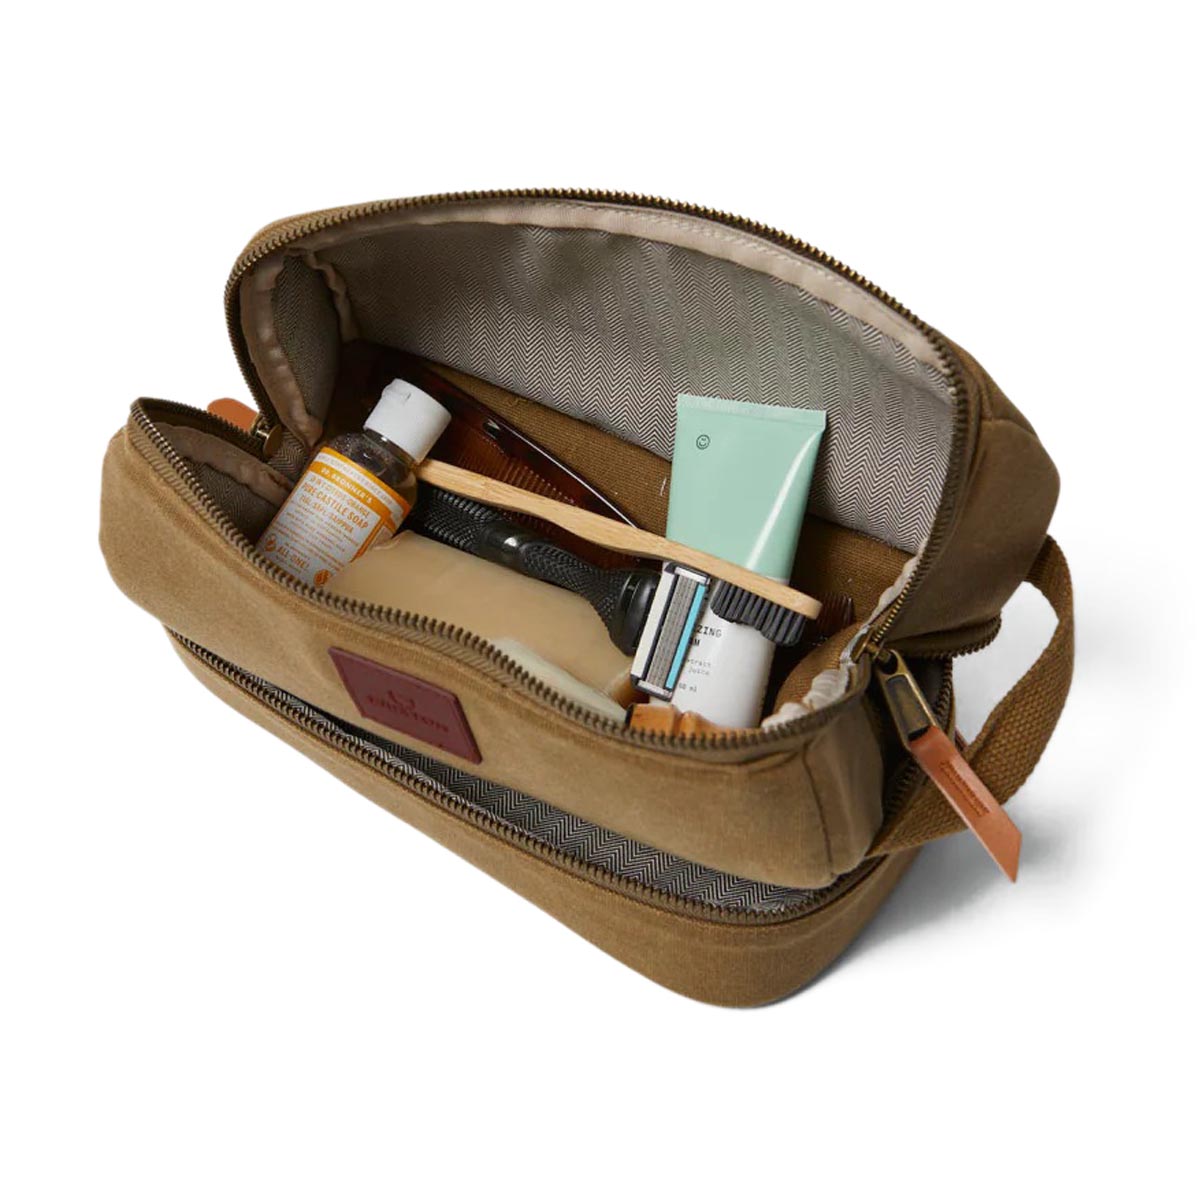 Brixton Traveler Dopp Kit Accessories - Olive Brown image 4